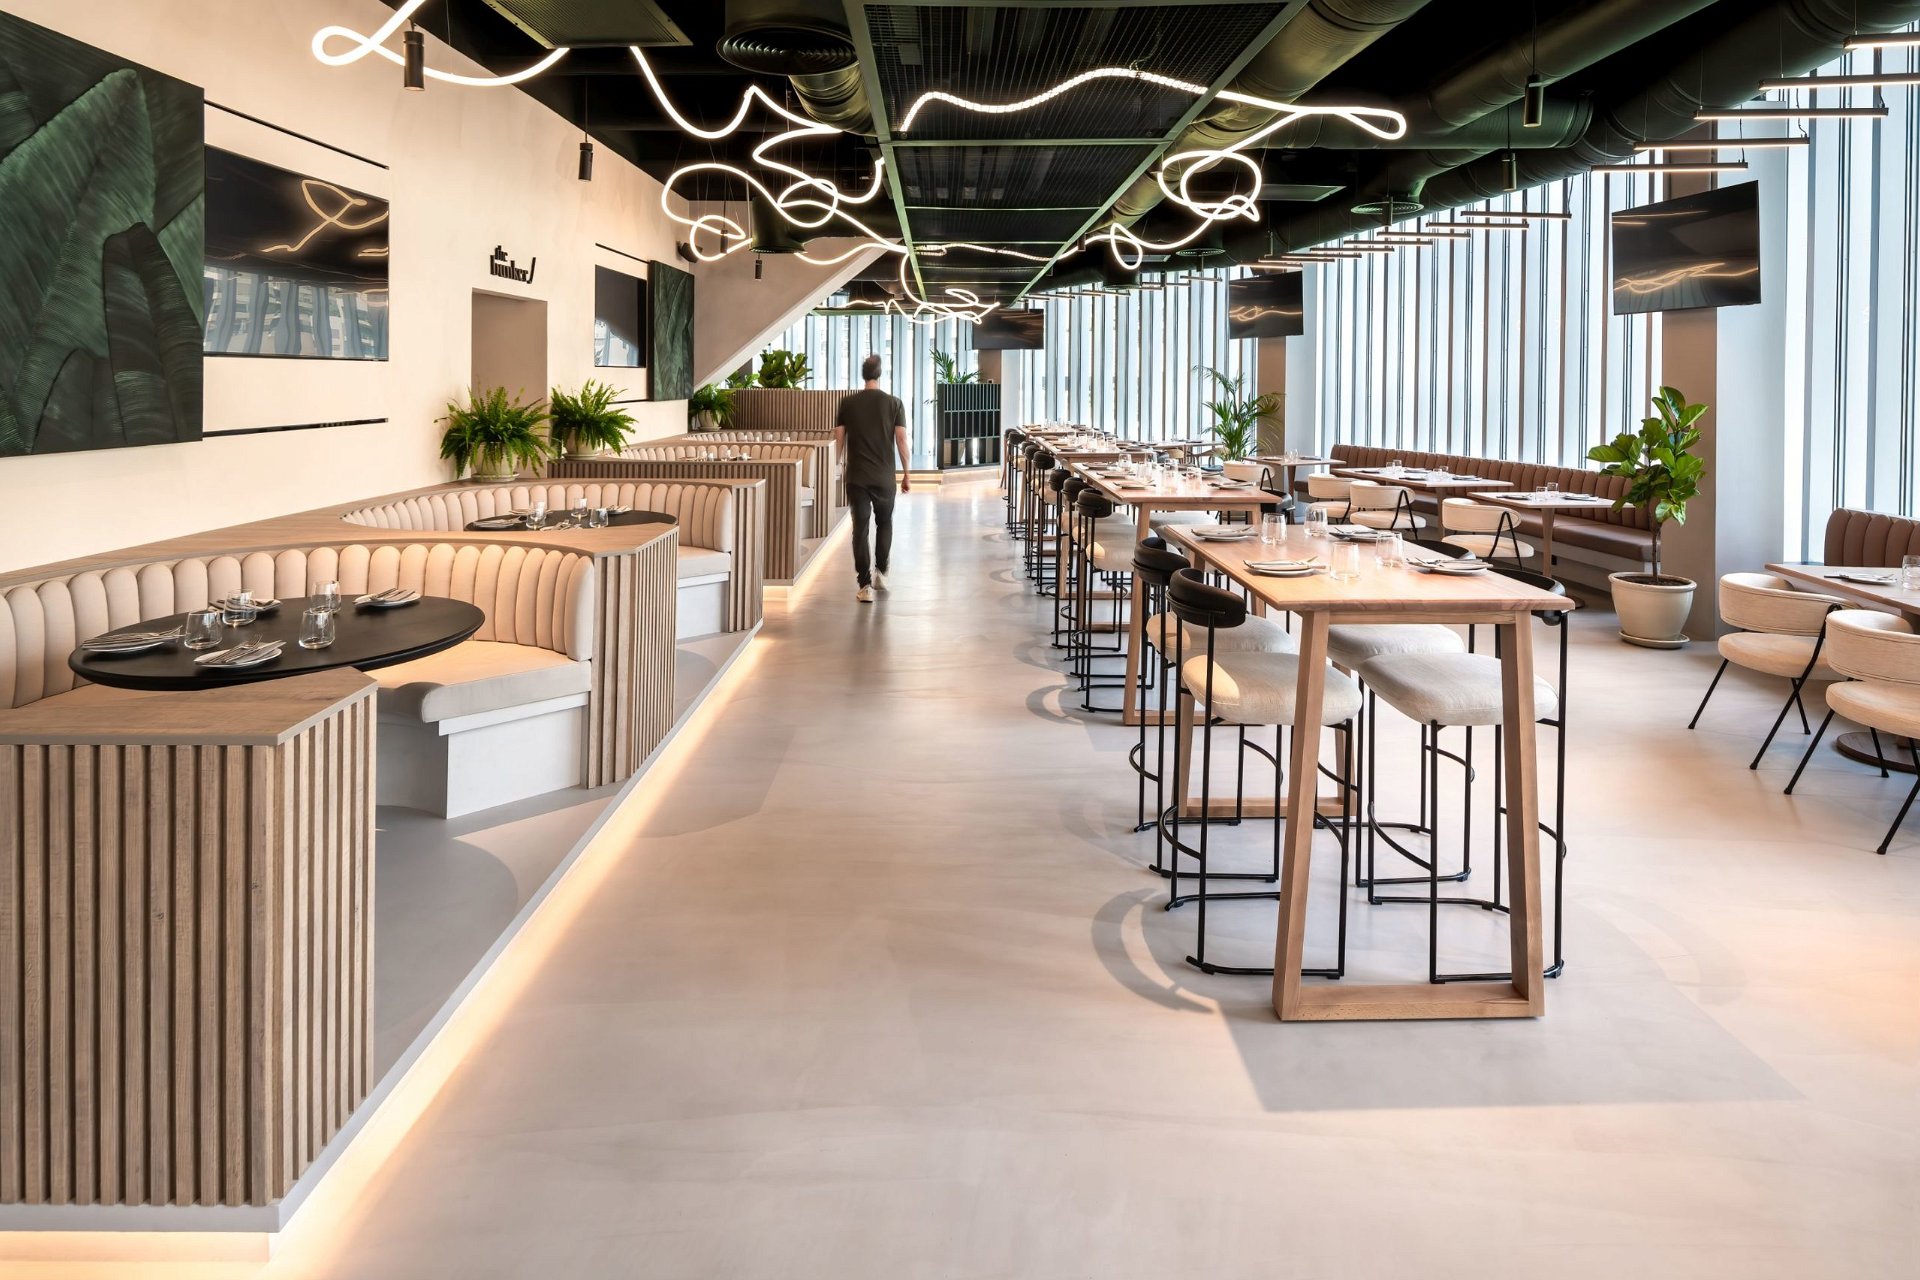 Bedrock Sports Bar And Restaurant Dubai Marina Interior Design On Love That